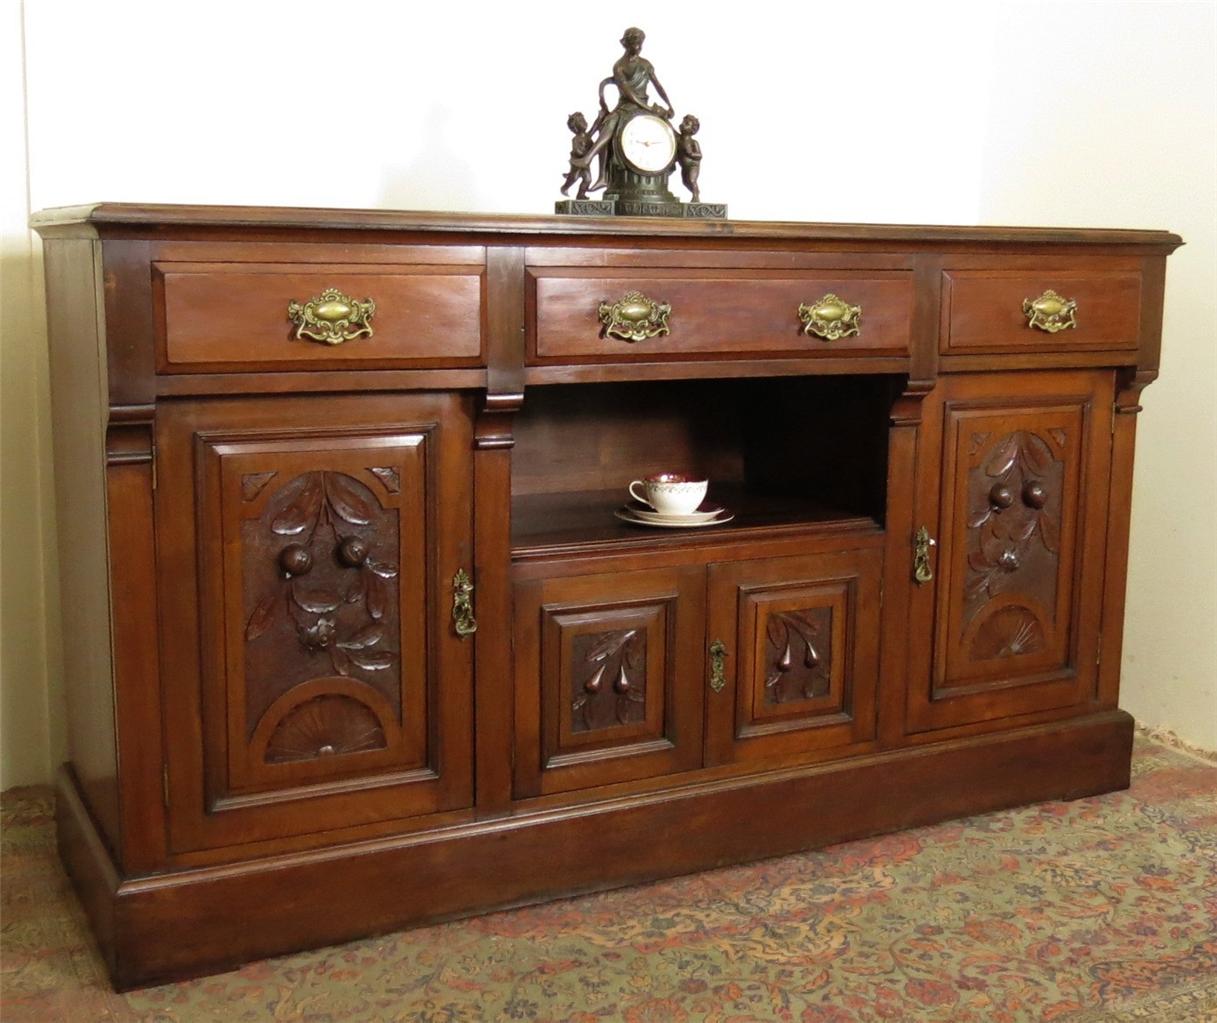 / cupboard / Sideboard about  Credenza /Cabinet /Cupboard  Buffet sydney vintage Antique Dresser